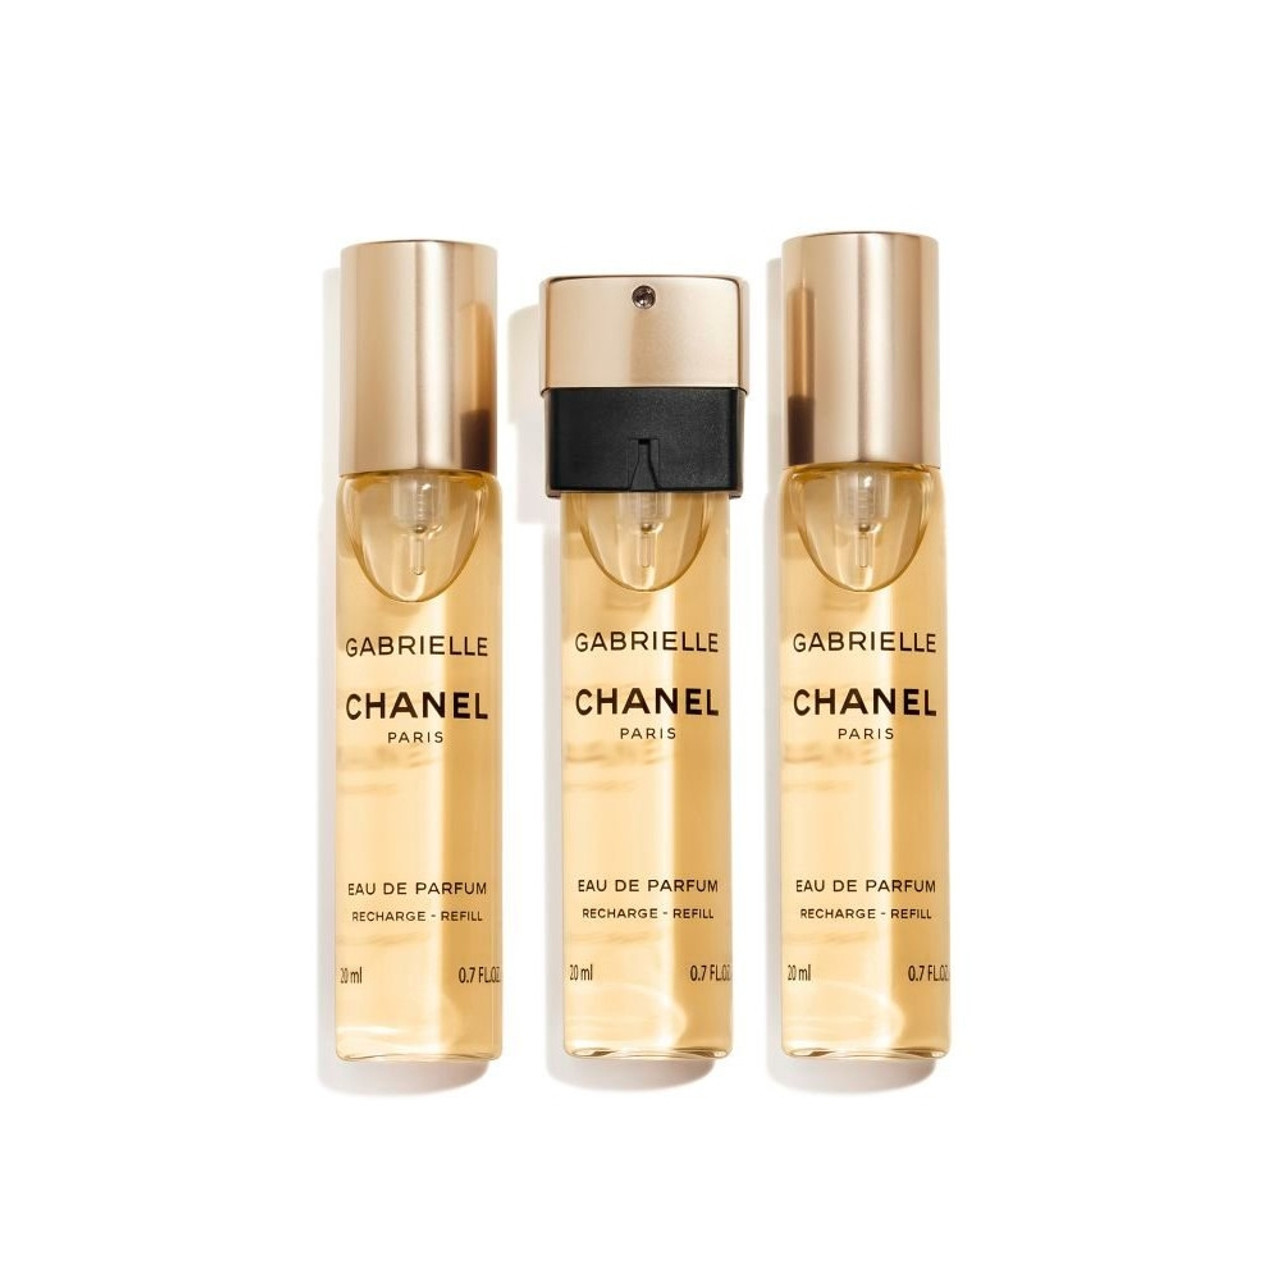 CHANEL Gabrielle Essence 3.4 fl. oz. Eau de Parfum Spray for Women